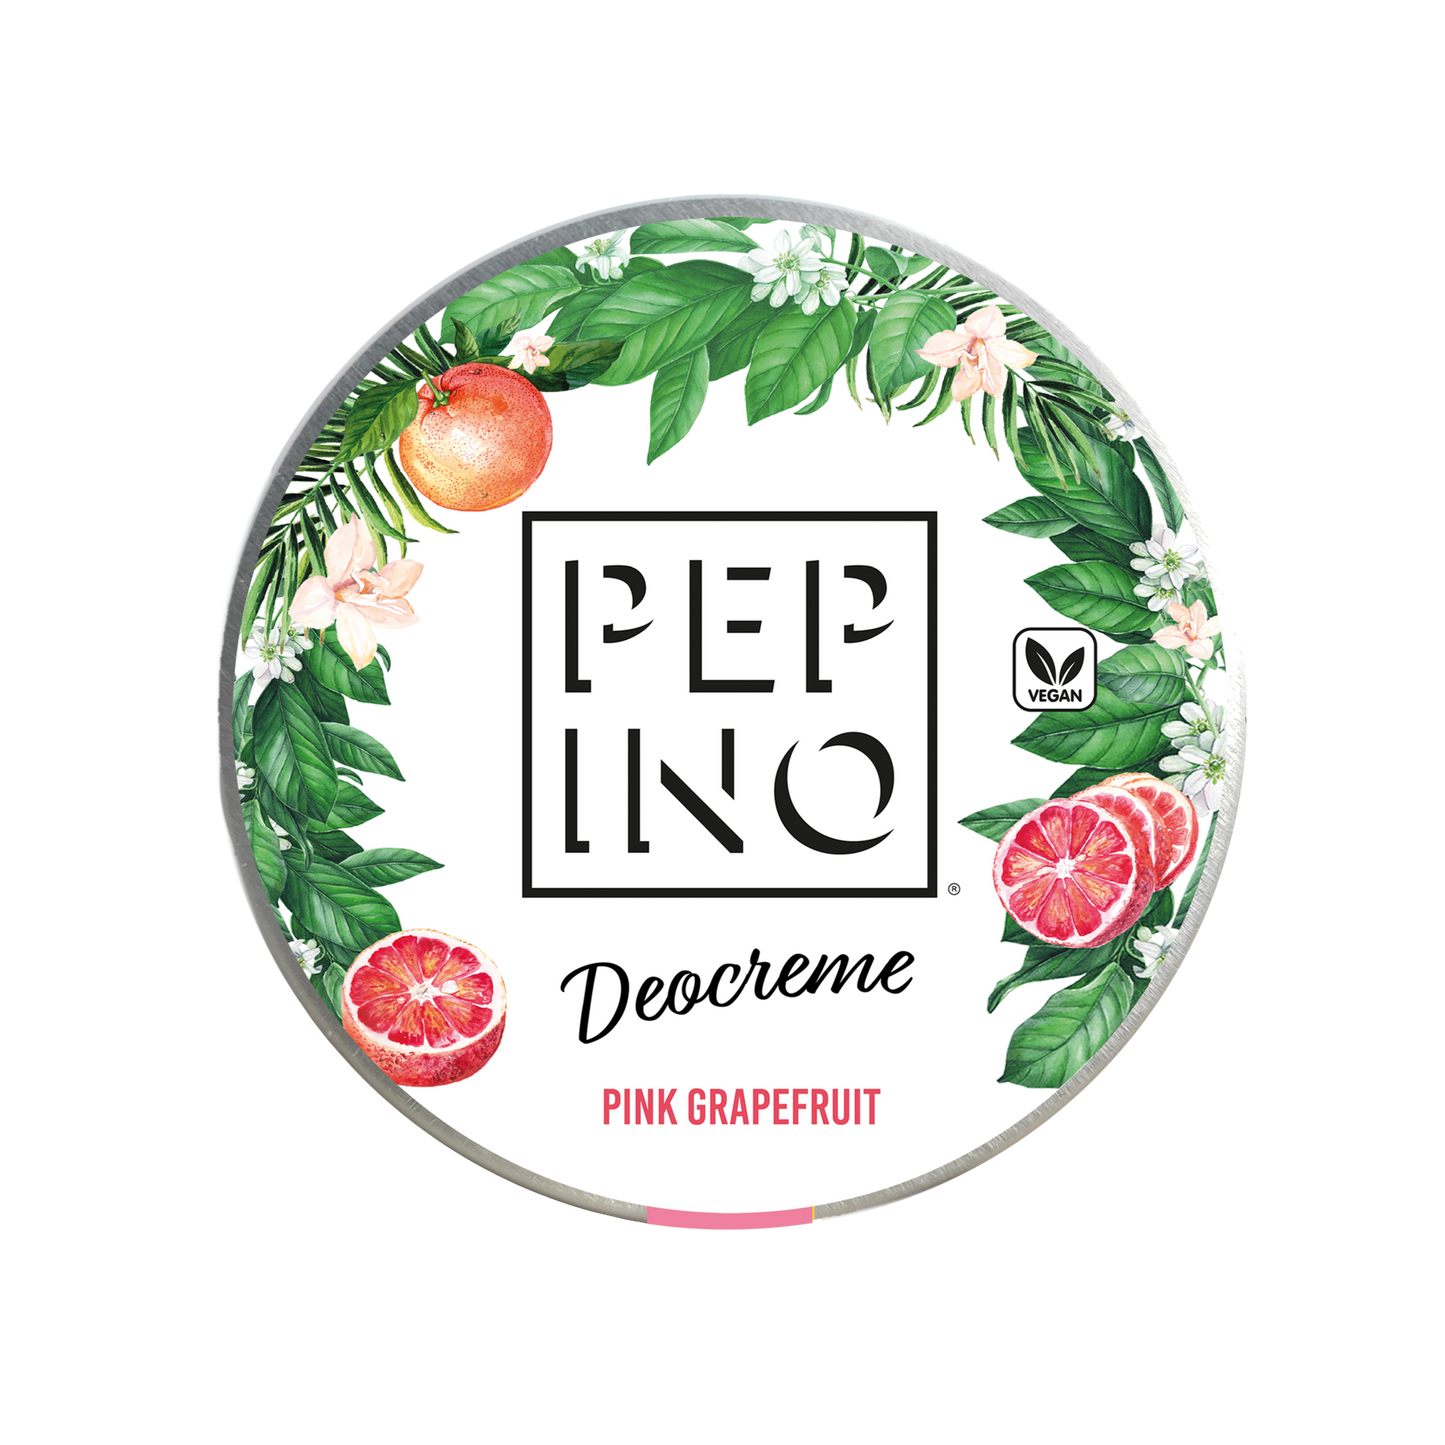 Pepino Deocreme Pink Grapefruit